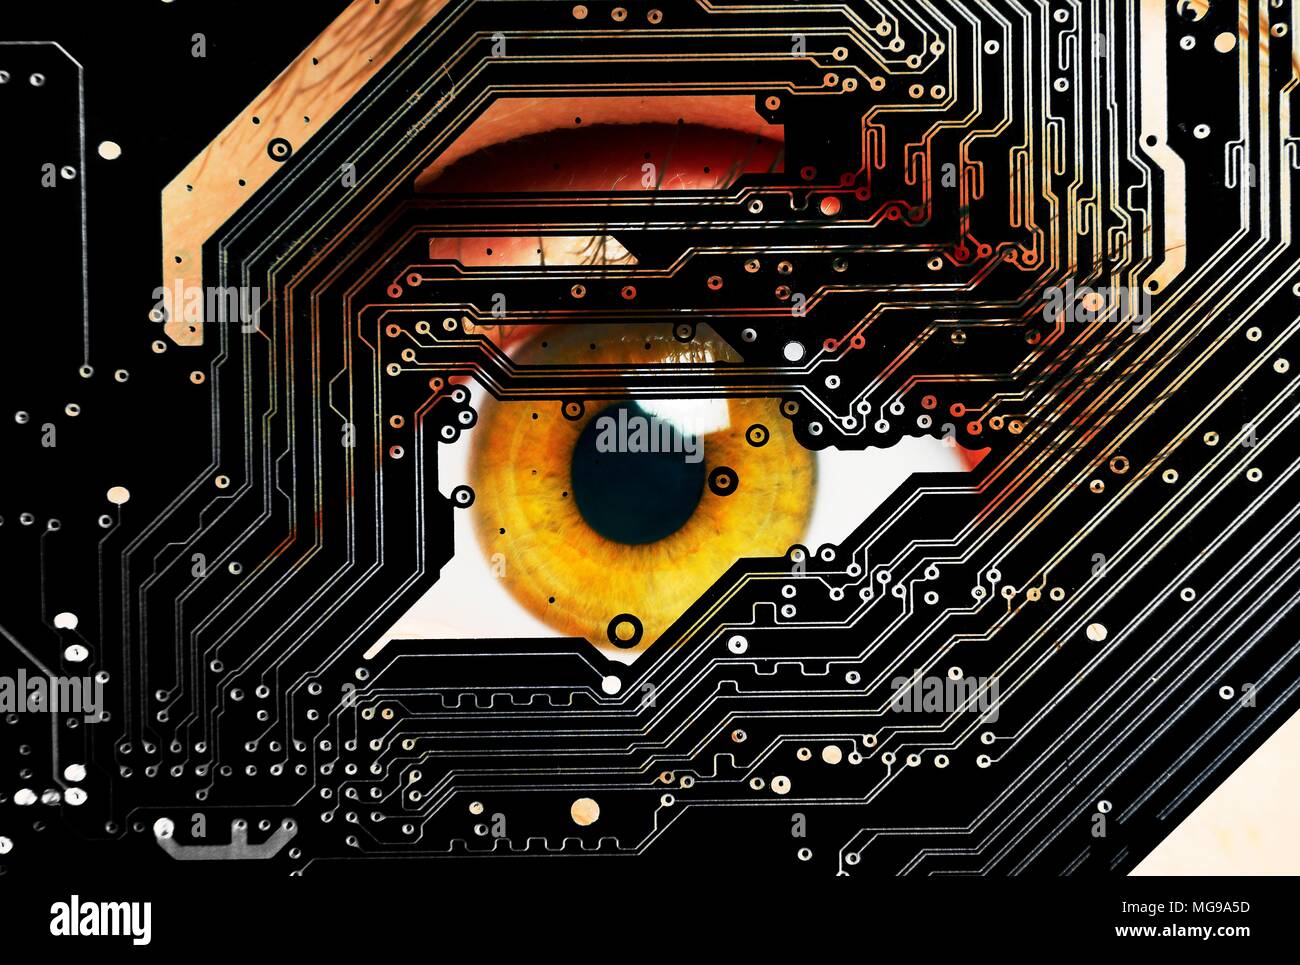 Human eye looking through circuit board. Stock Photo